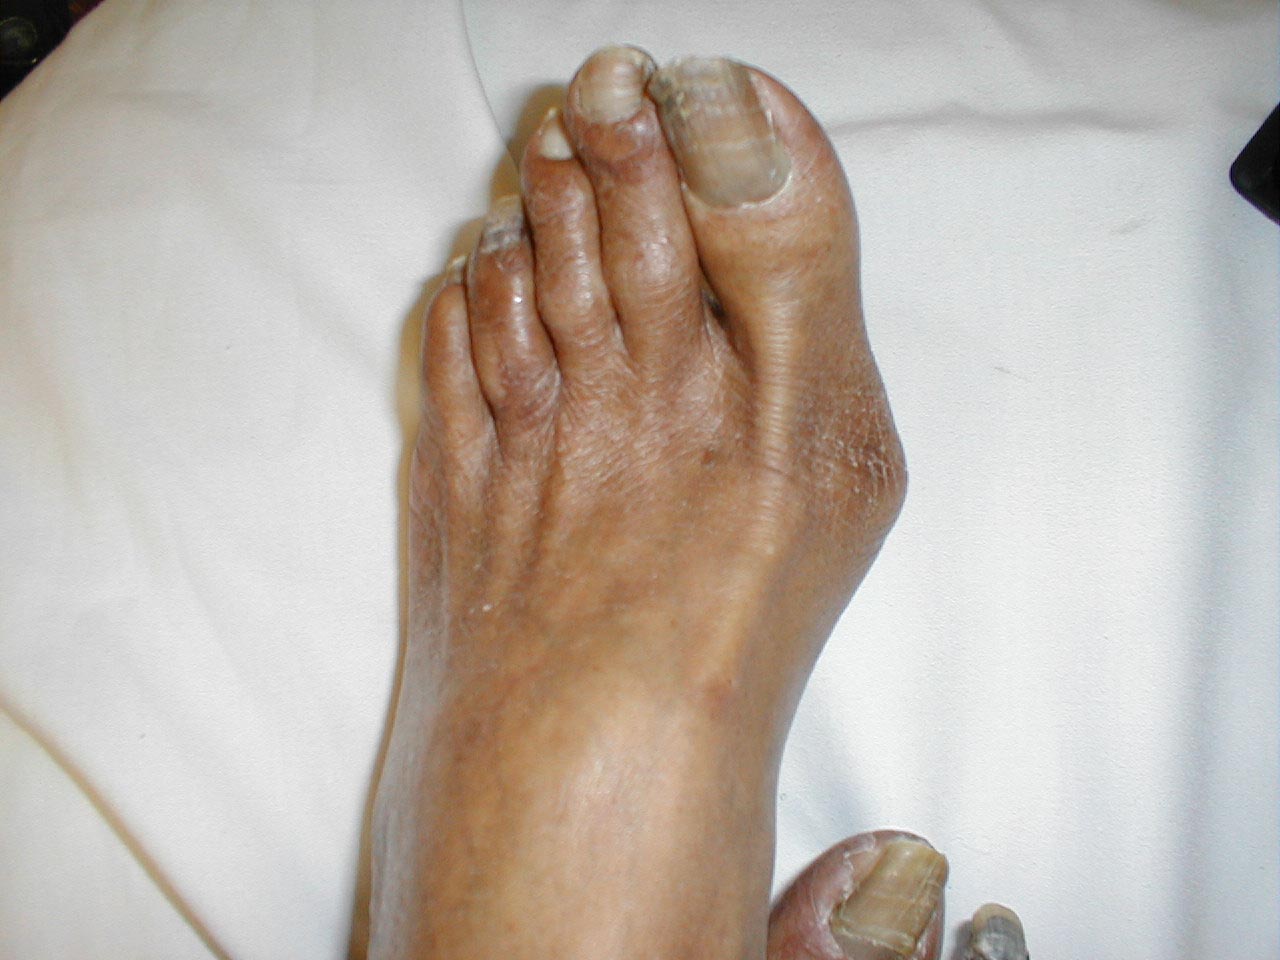 Same patient. Normal left foot for comparison.